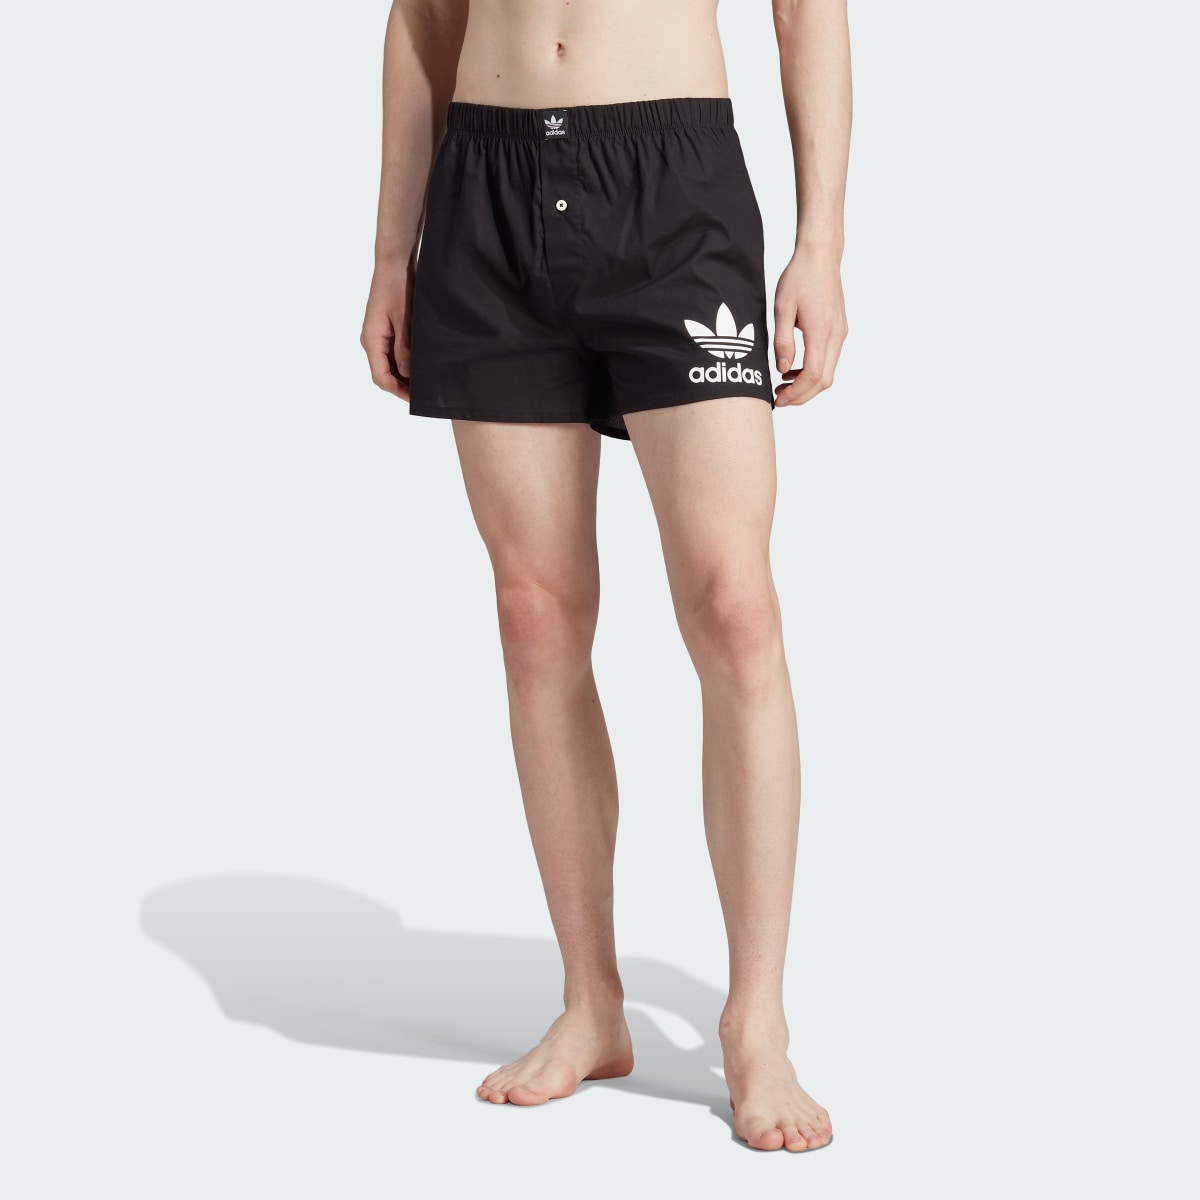 Adidas Comfort Core Cotton Icon Woven Boxer Underwear 2 Pack. 4